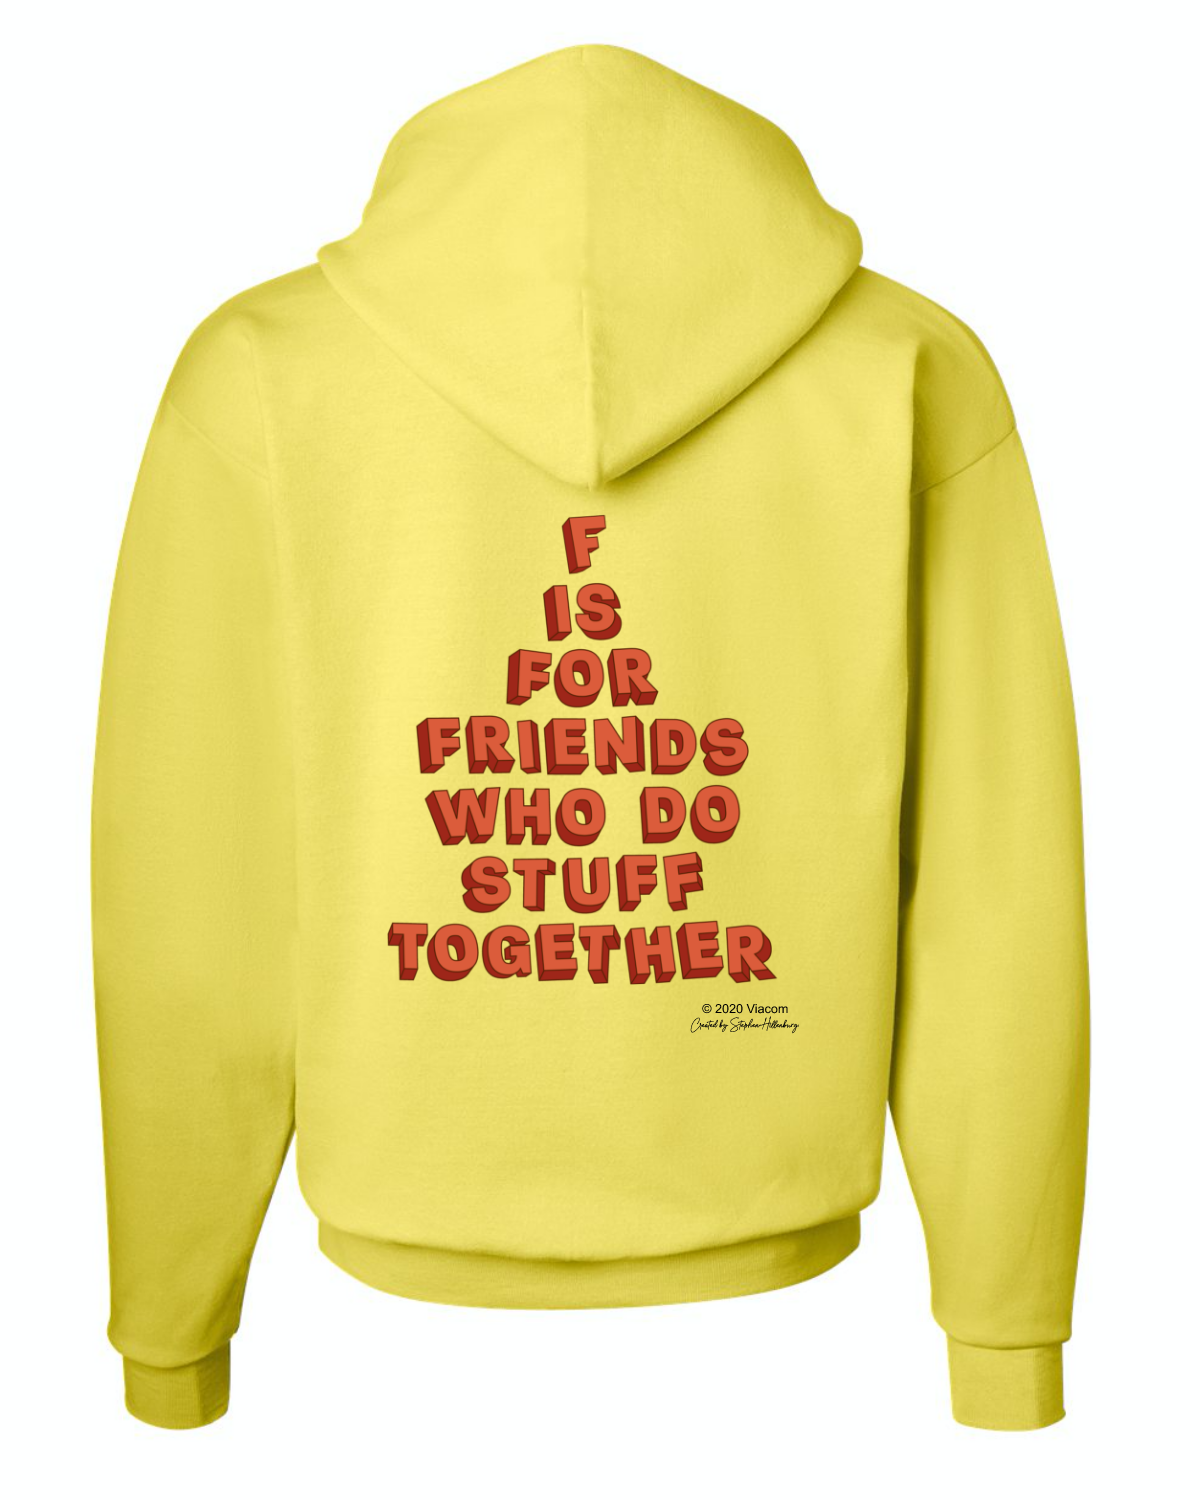 SpongeBob SquarePants Do Stuff Together Hooded Sweatshirt